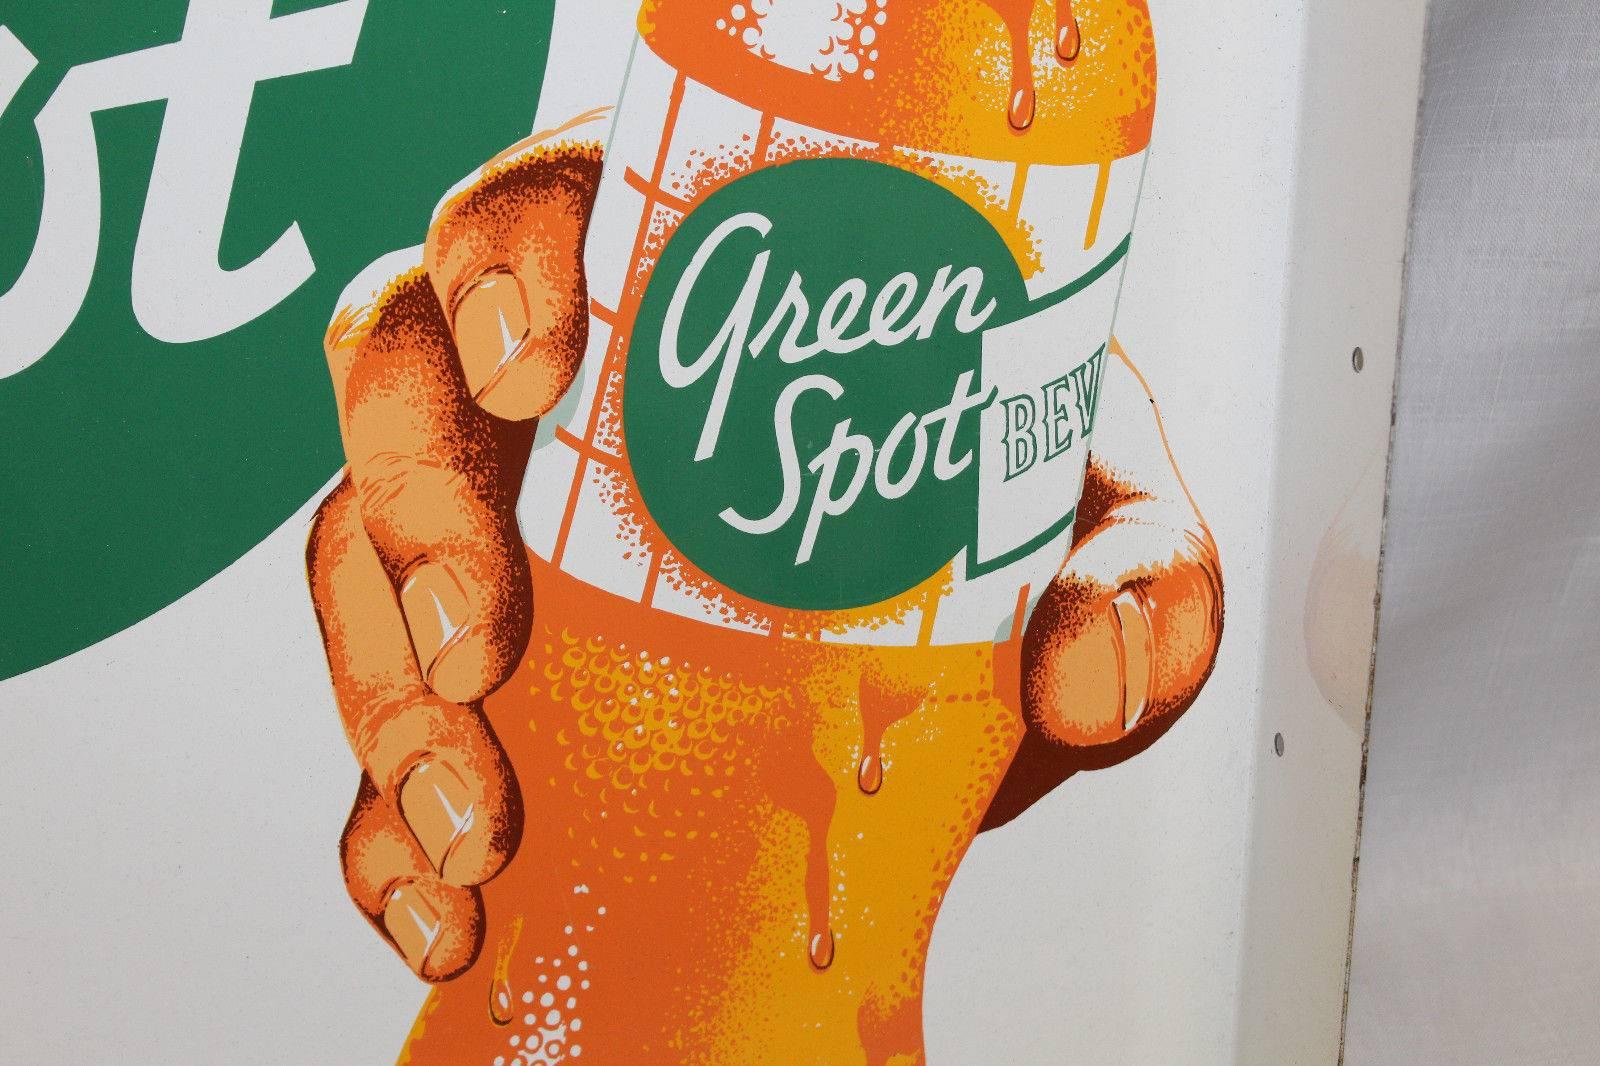 green spot orange drink